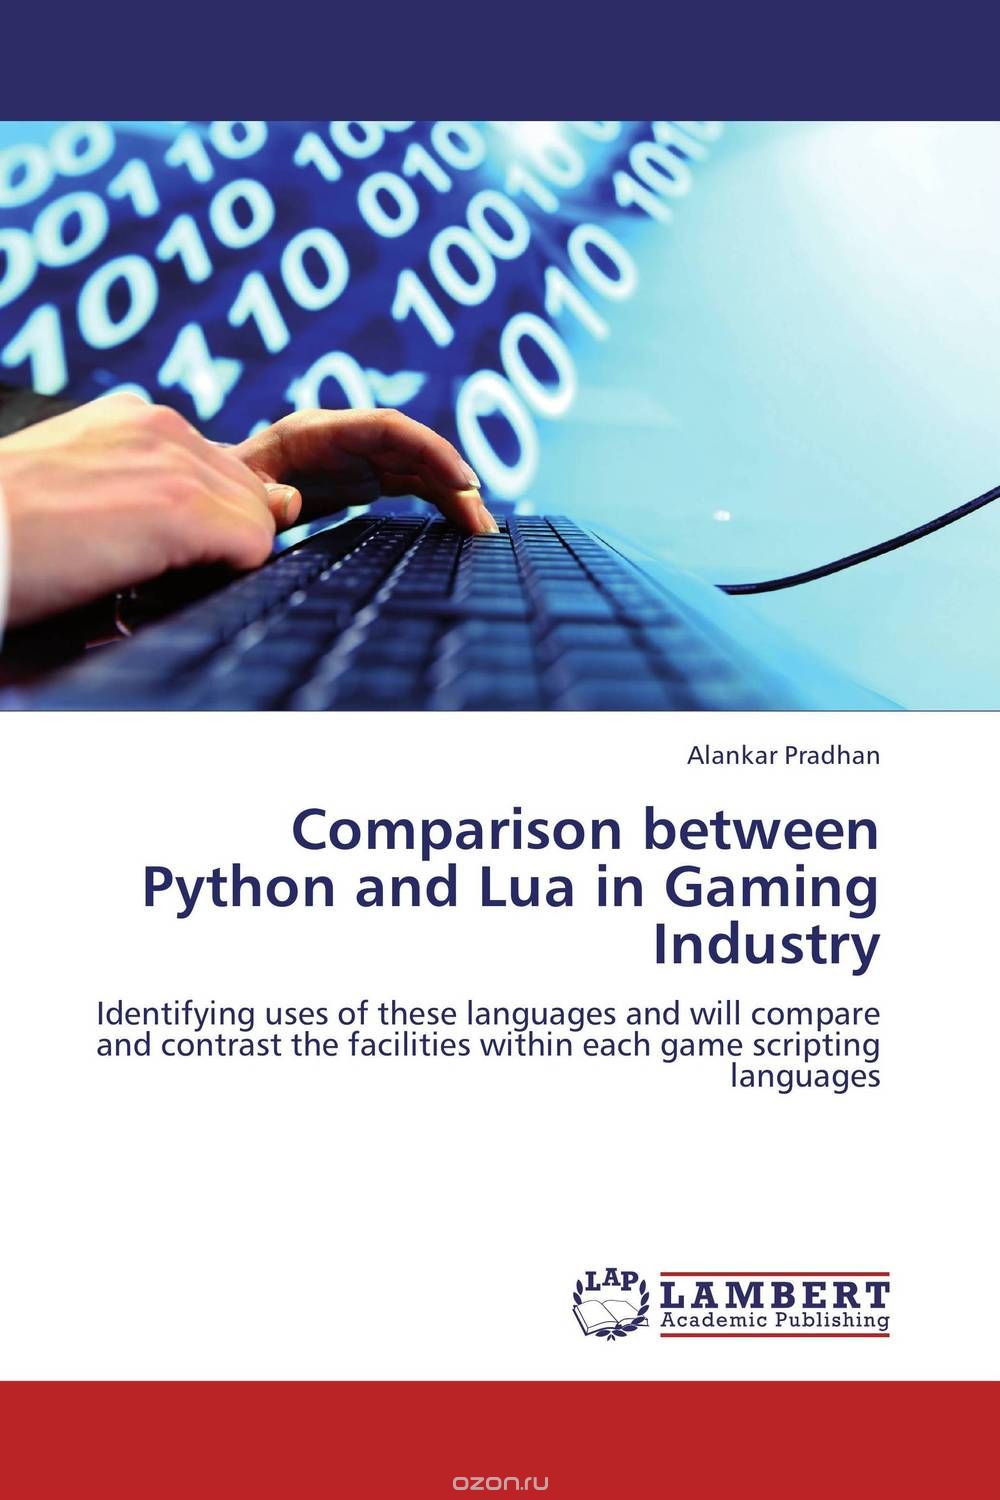 Скачать книгу "Comparison between Python and Lua in Gaming Industry"